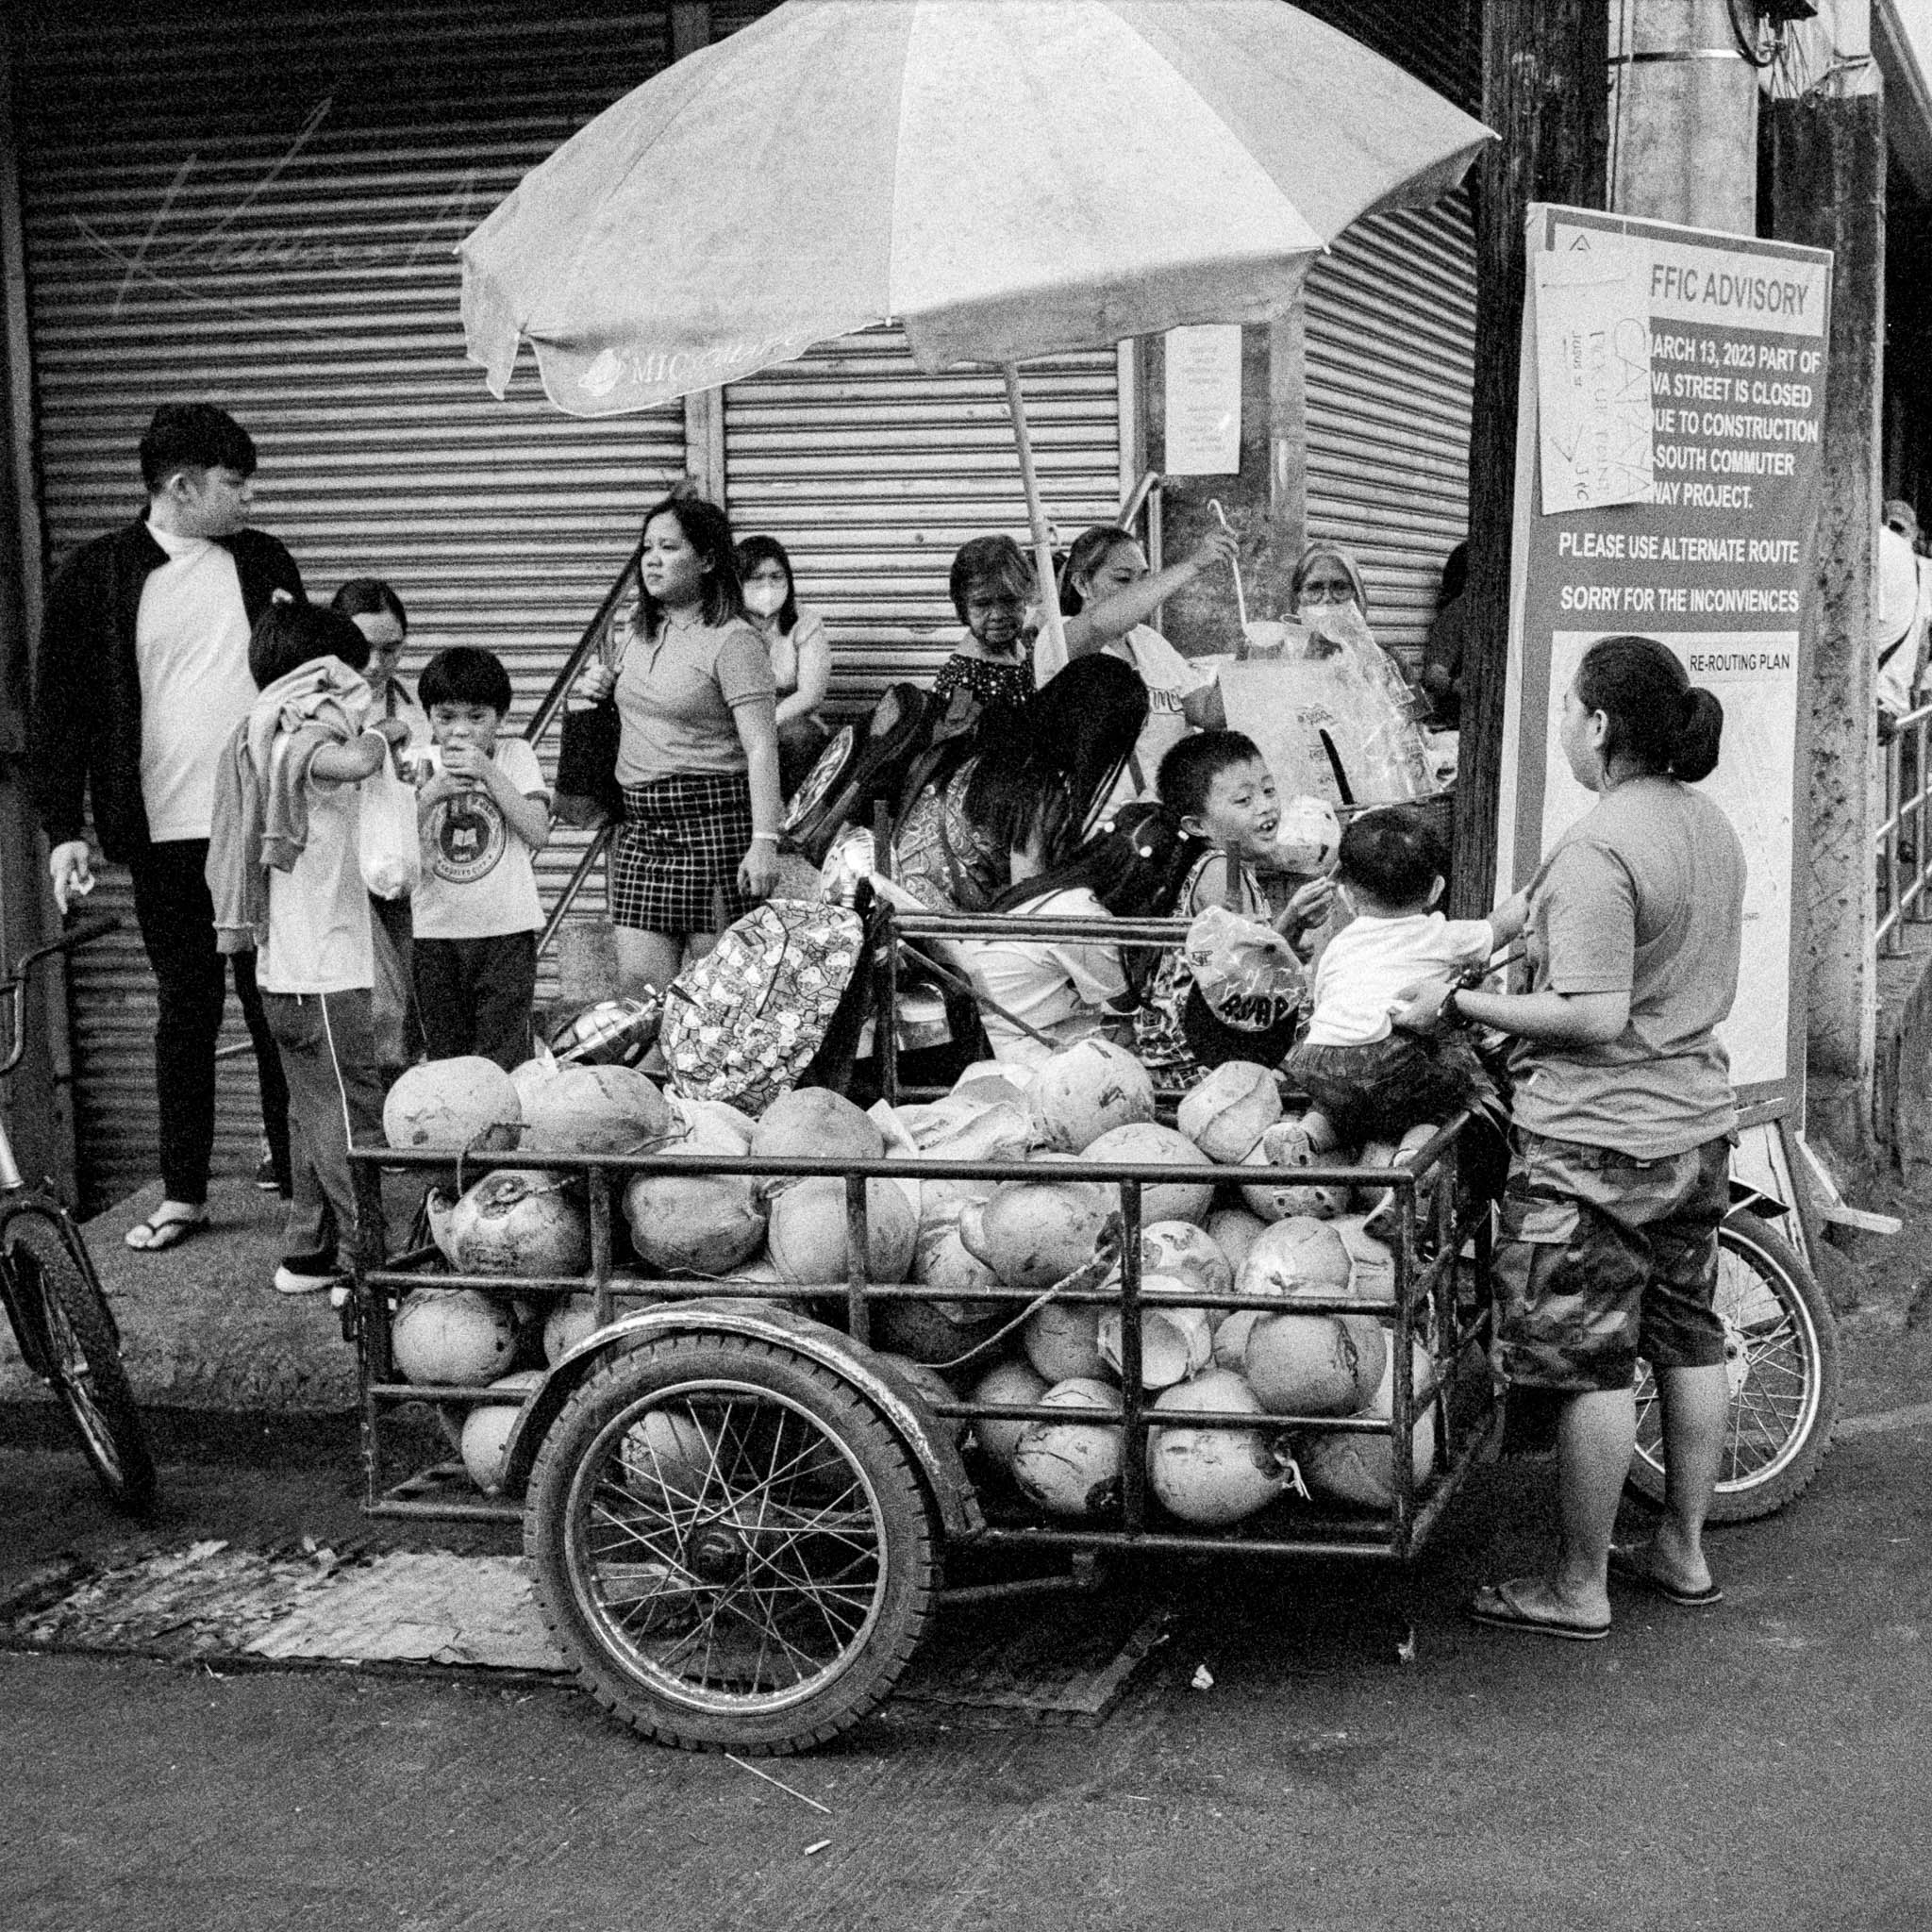 Bustling Street Market Scene, Vendor Selling Fresh Fruits from Cart in Black and White Photo